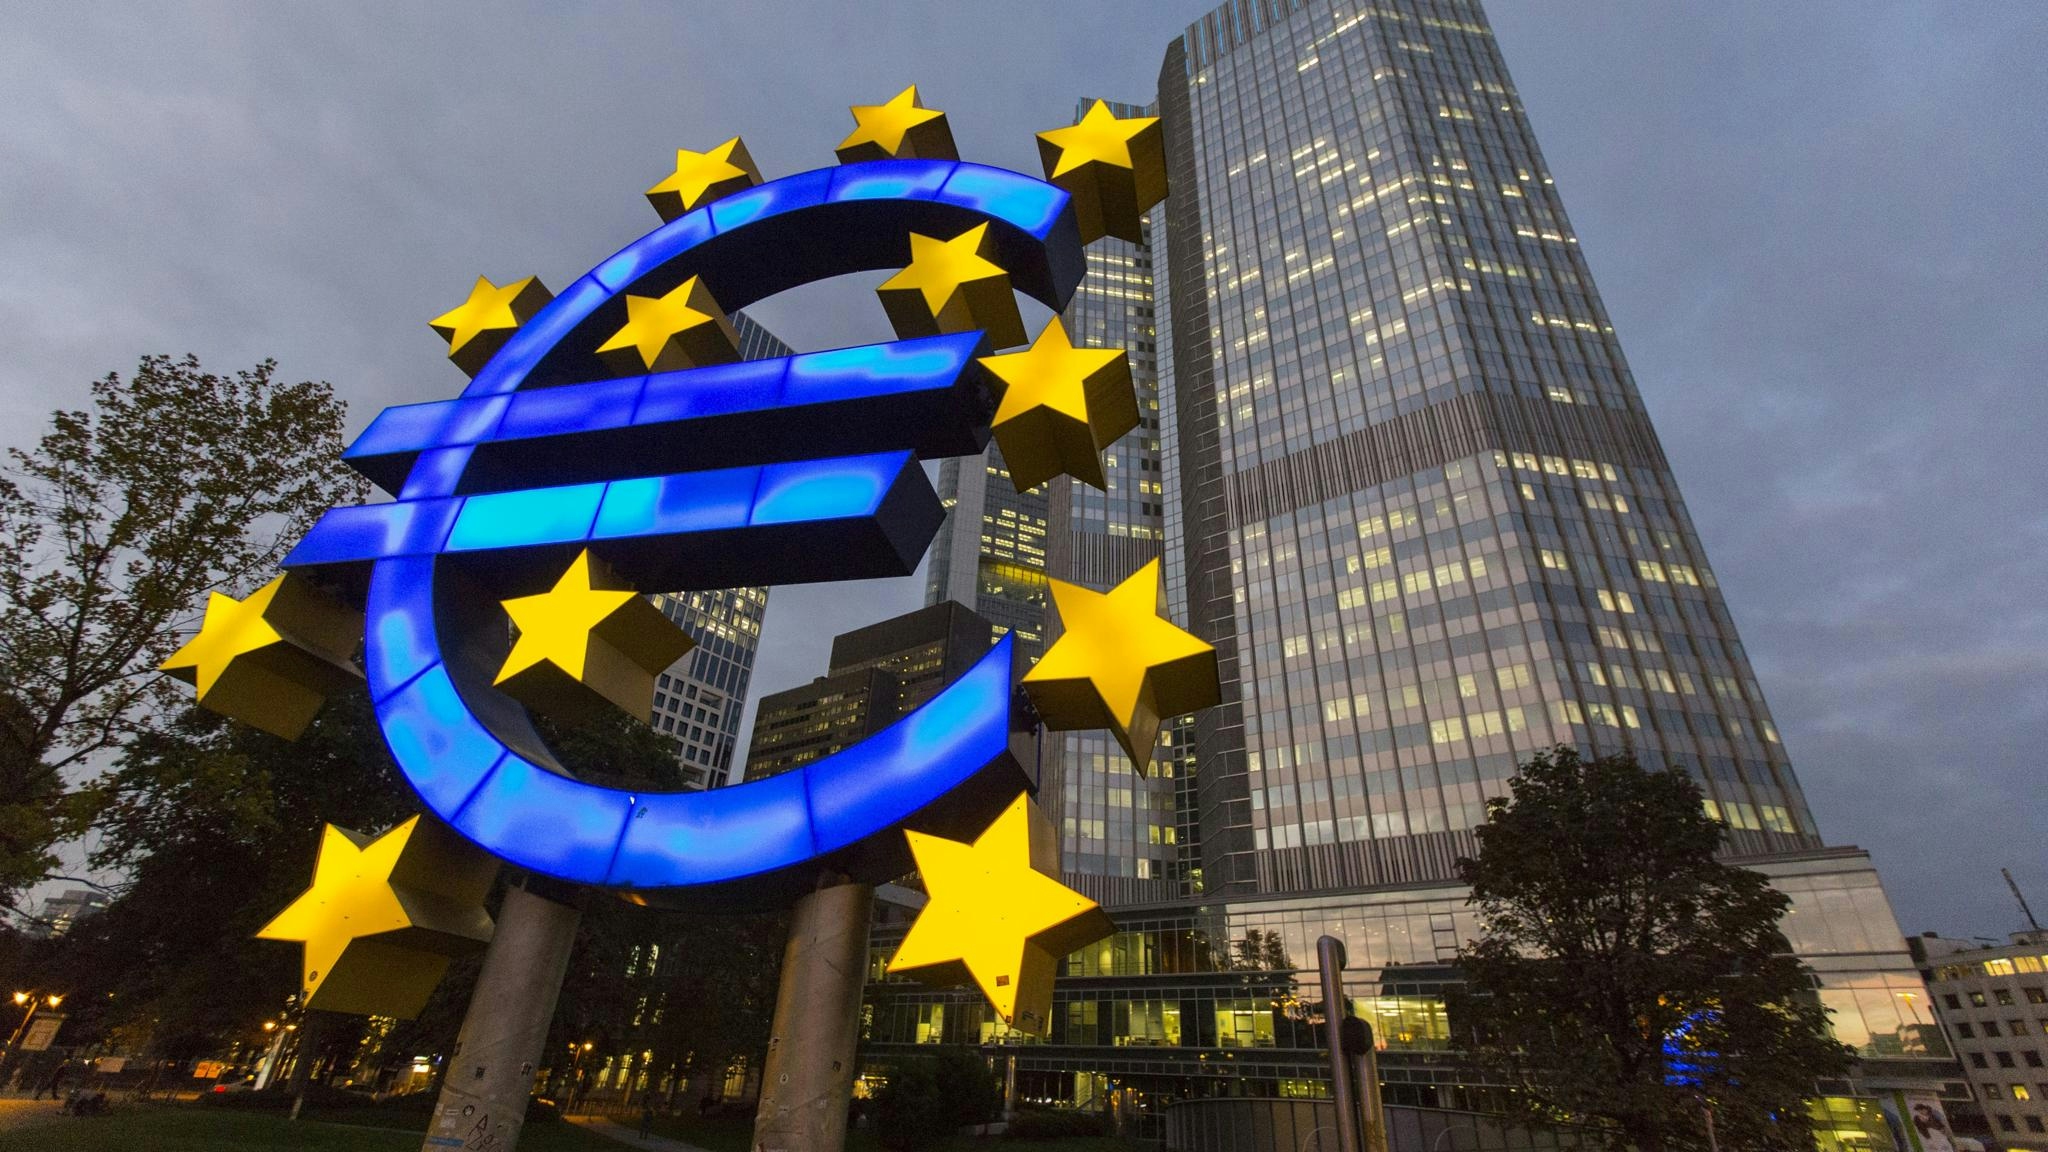 Carousel ECB image